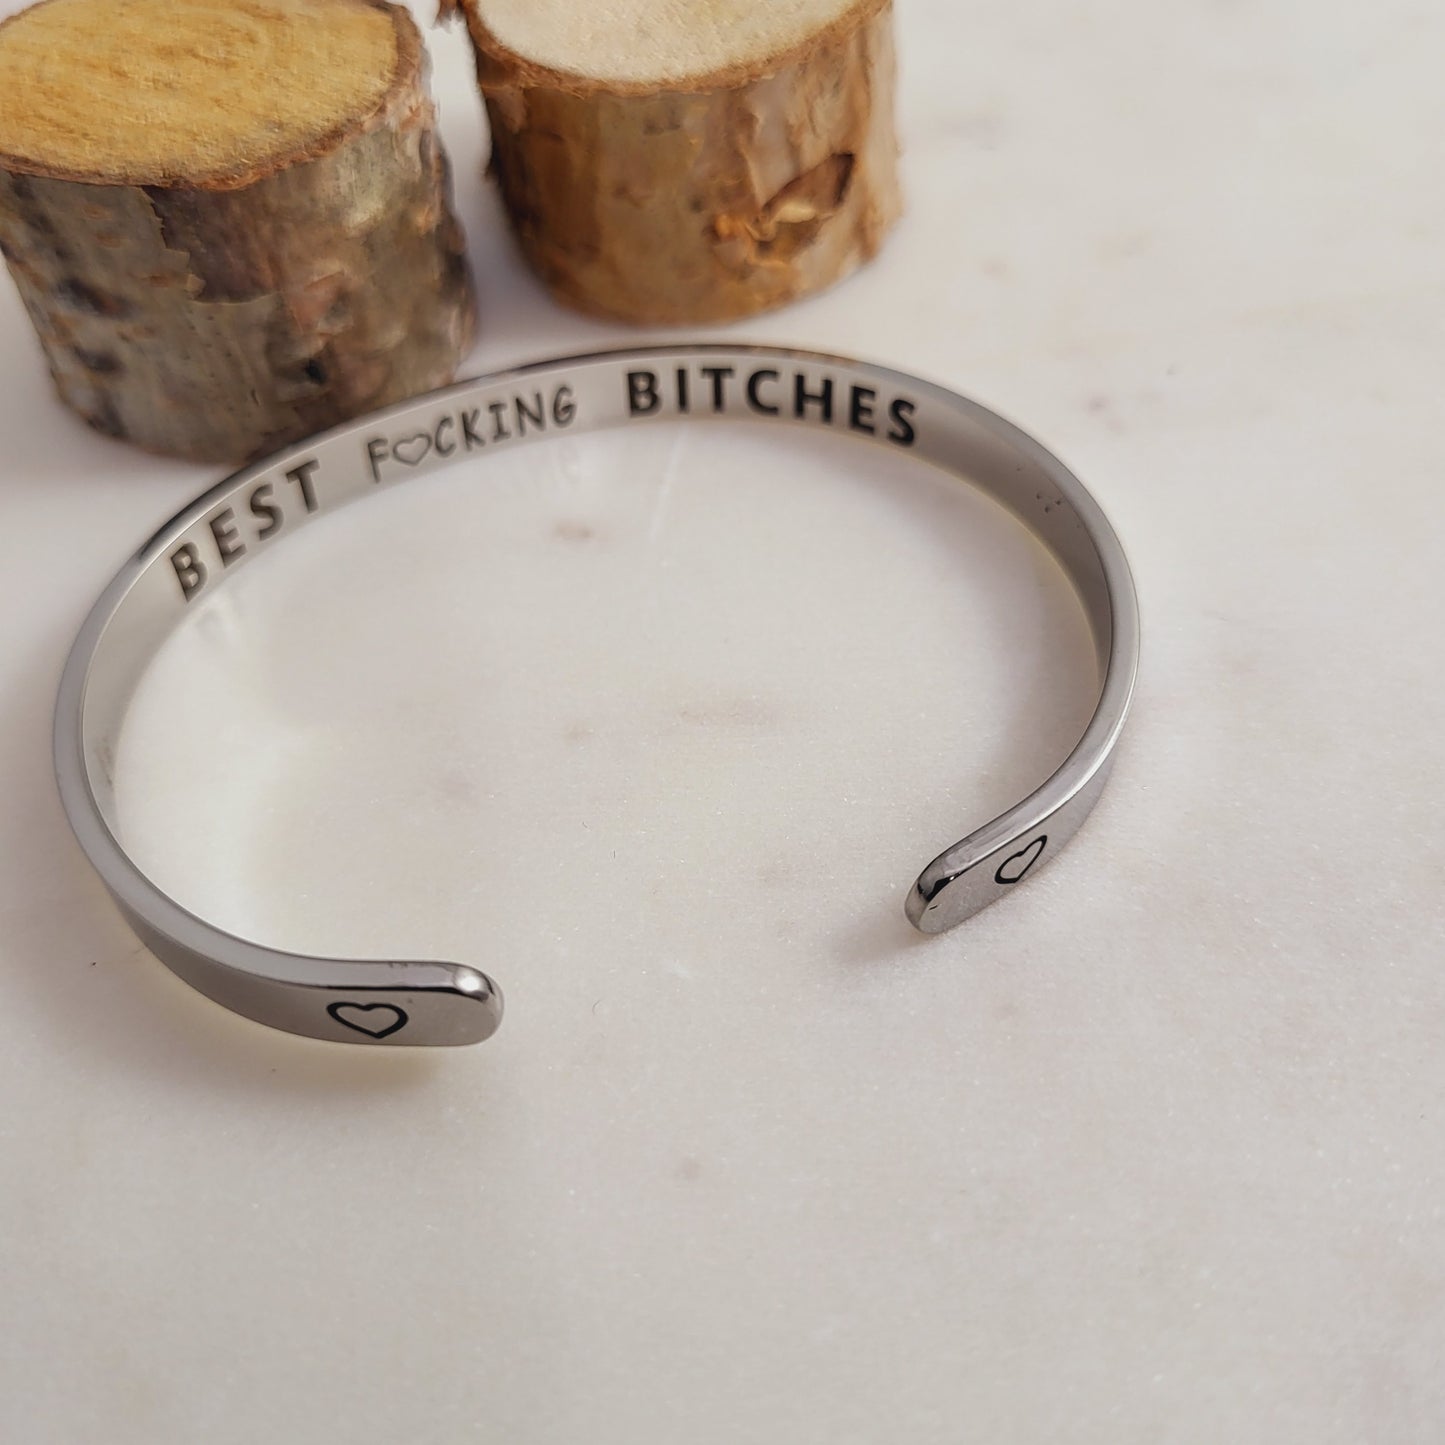 Best Fu*king Bitches Cuff Bangle bracelet for Girls, Besties BFF Friendship Gifts